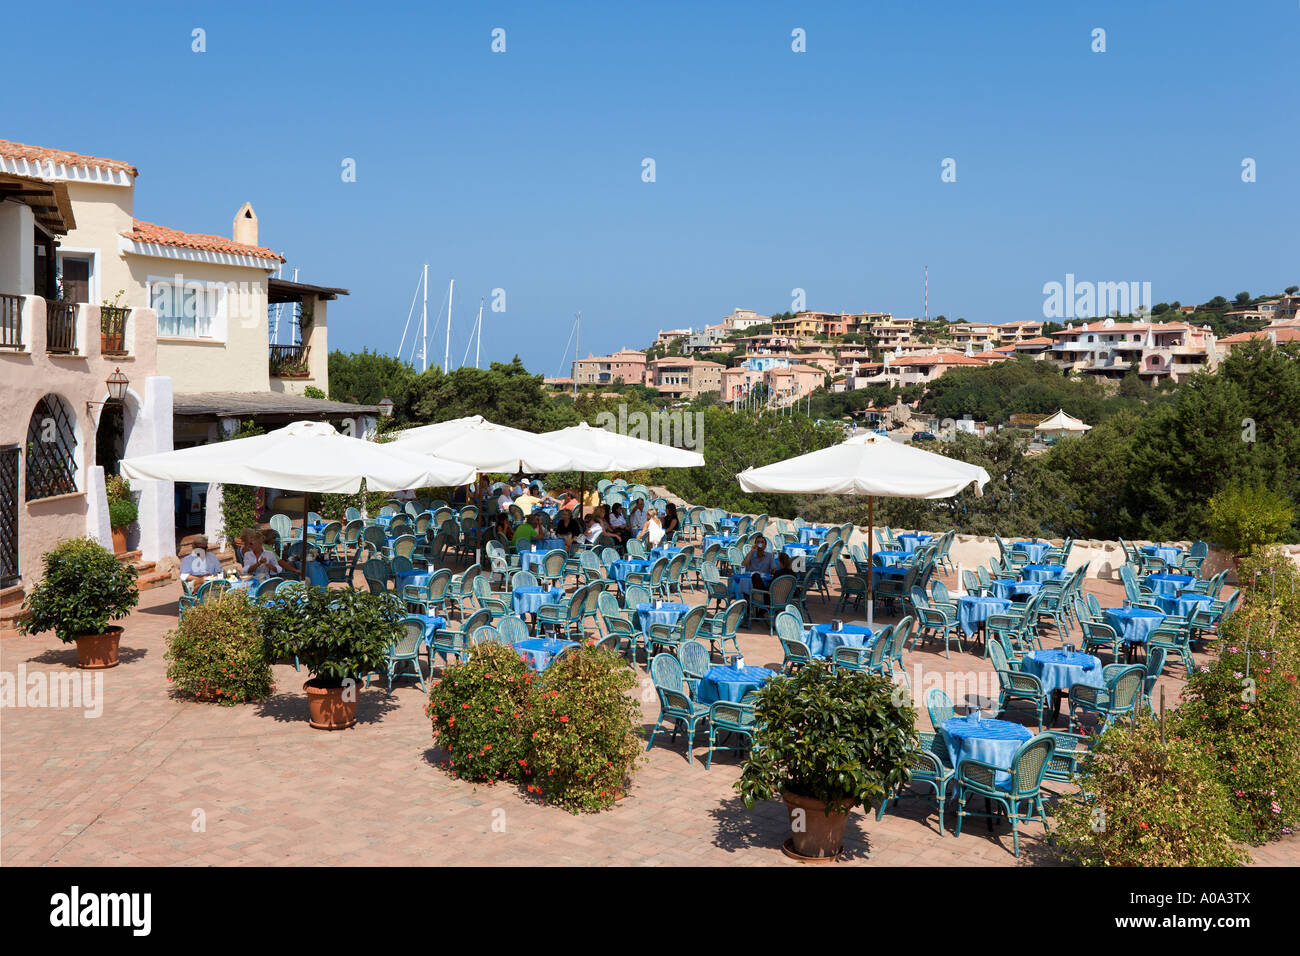 Restaurant dans le centre-ville, la Piazza, Porto Cervo, Costa Smeralda, Sardaigne, Italie Banque D'Images